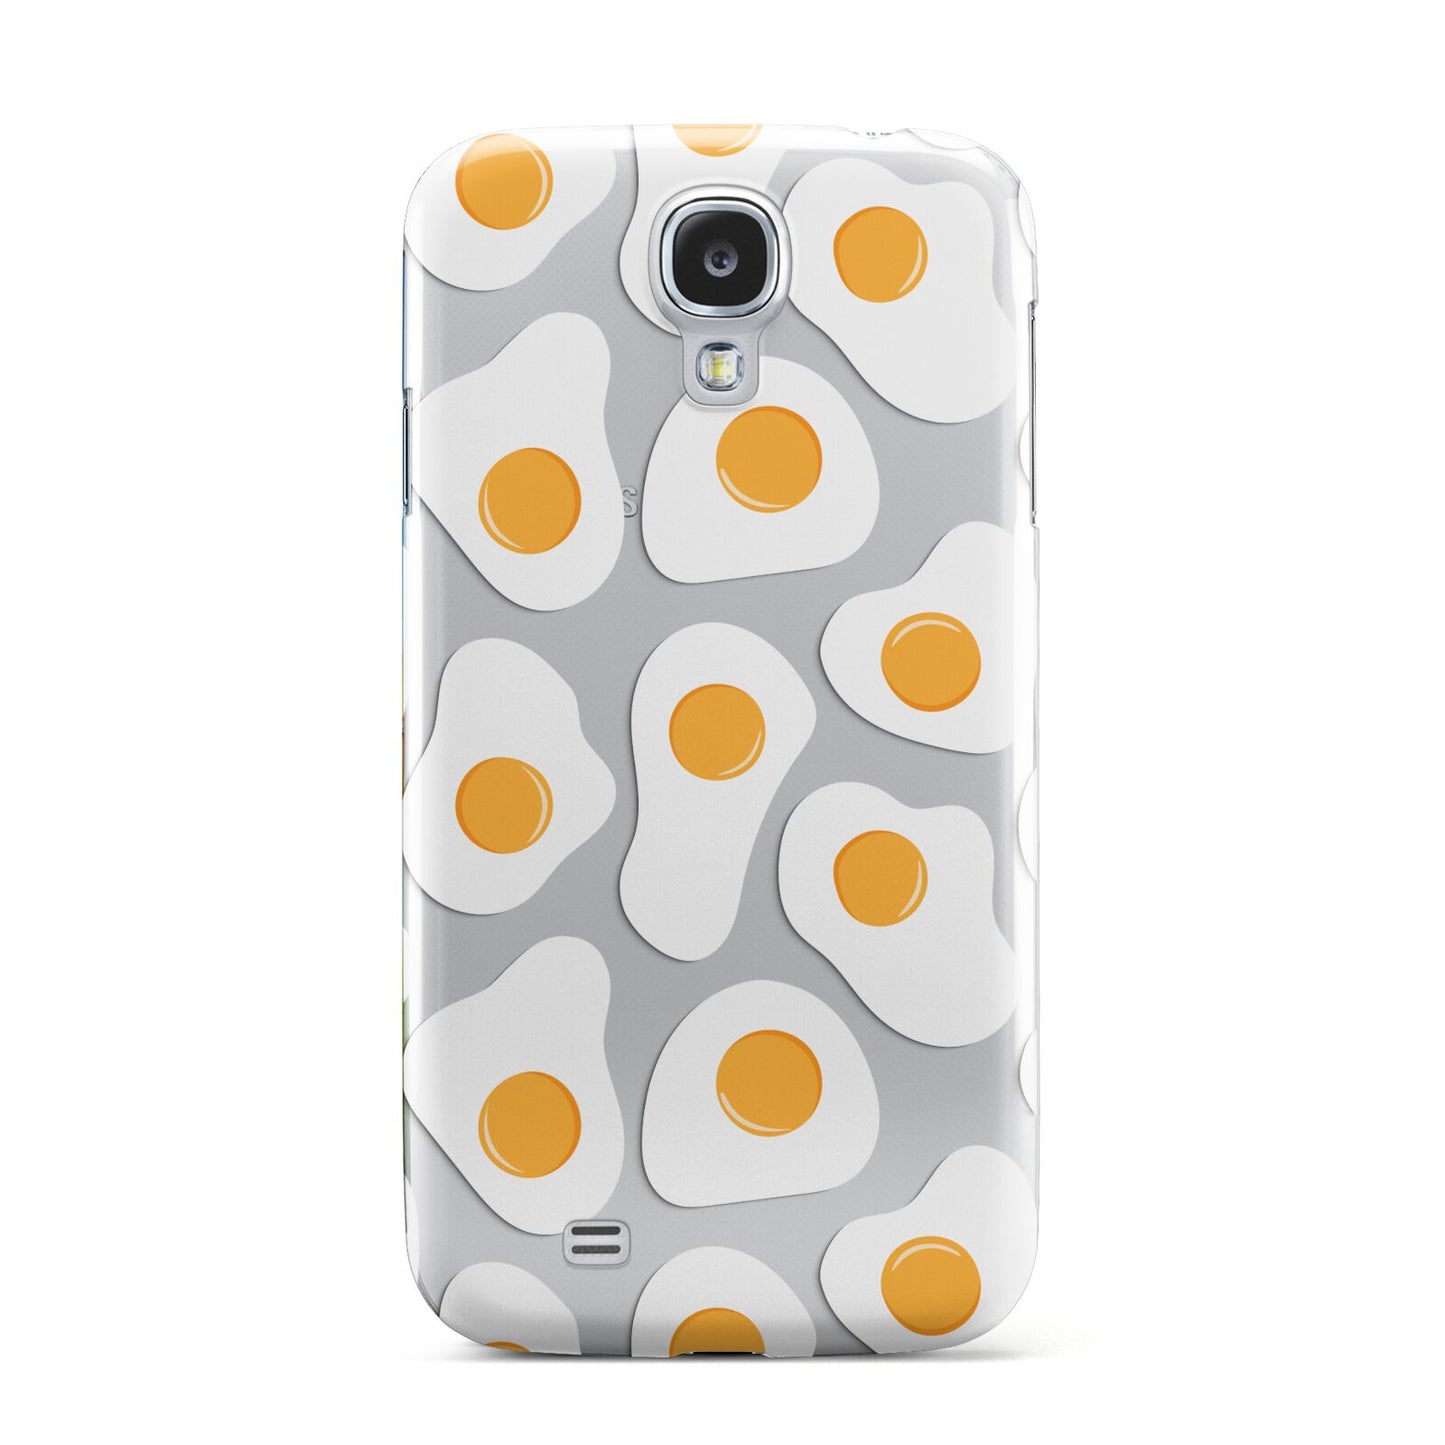 Fried Egg Samsung Galaxy S4 Case